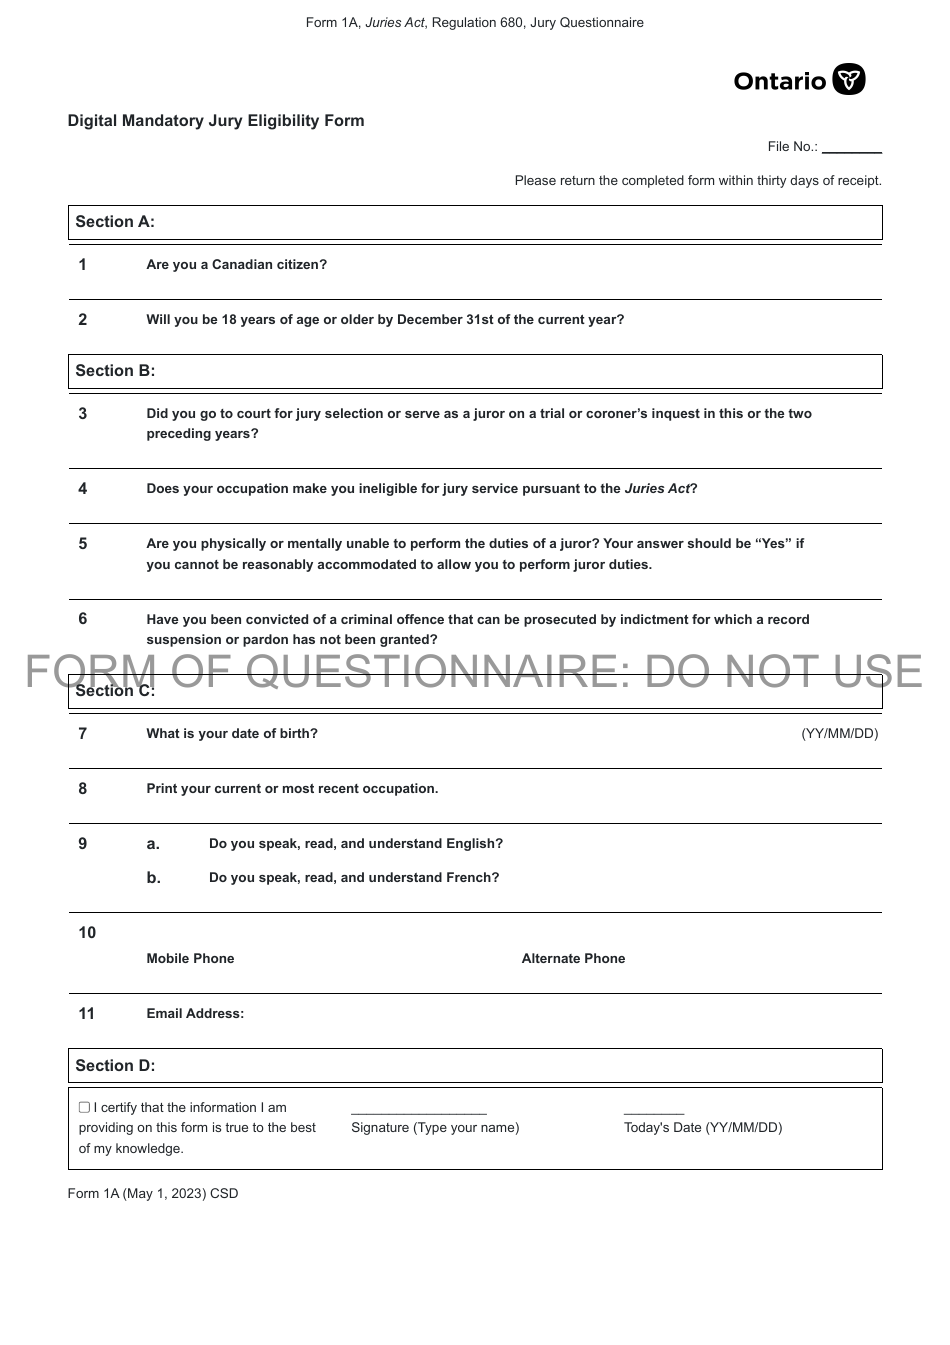 Form 1A Digital Mandatory Jury Eligibility Form - Ontario, Canada, Page 1